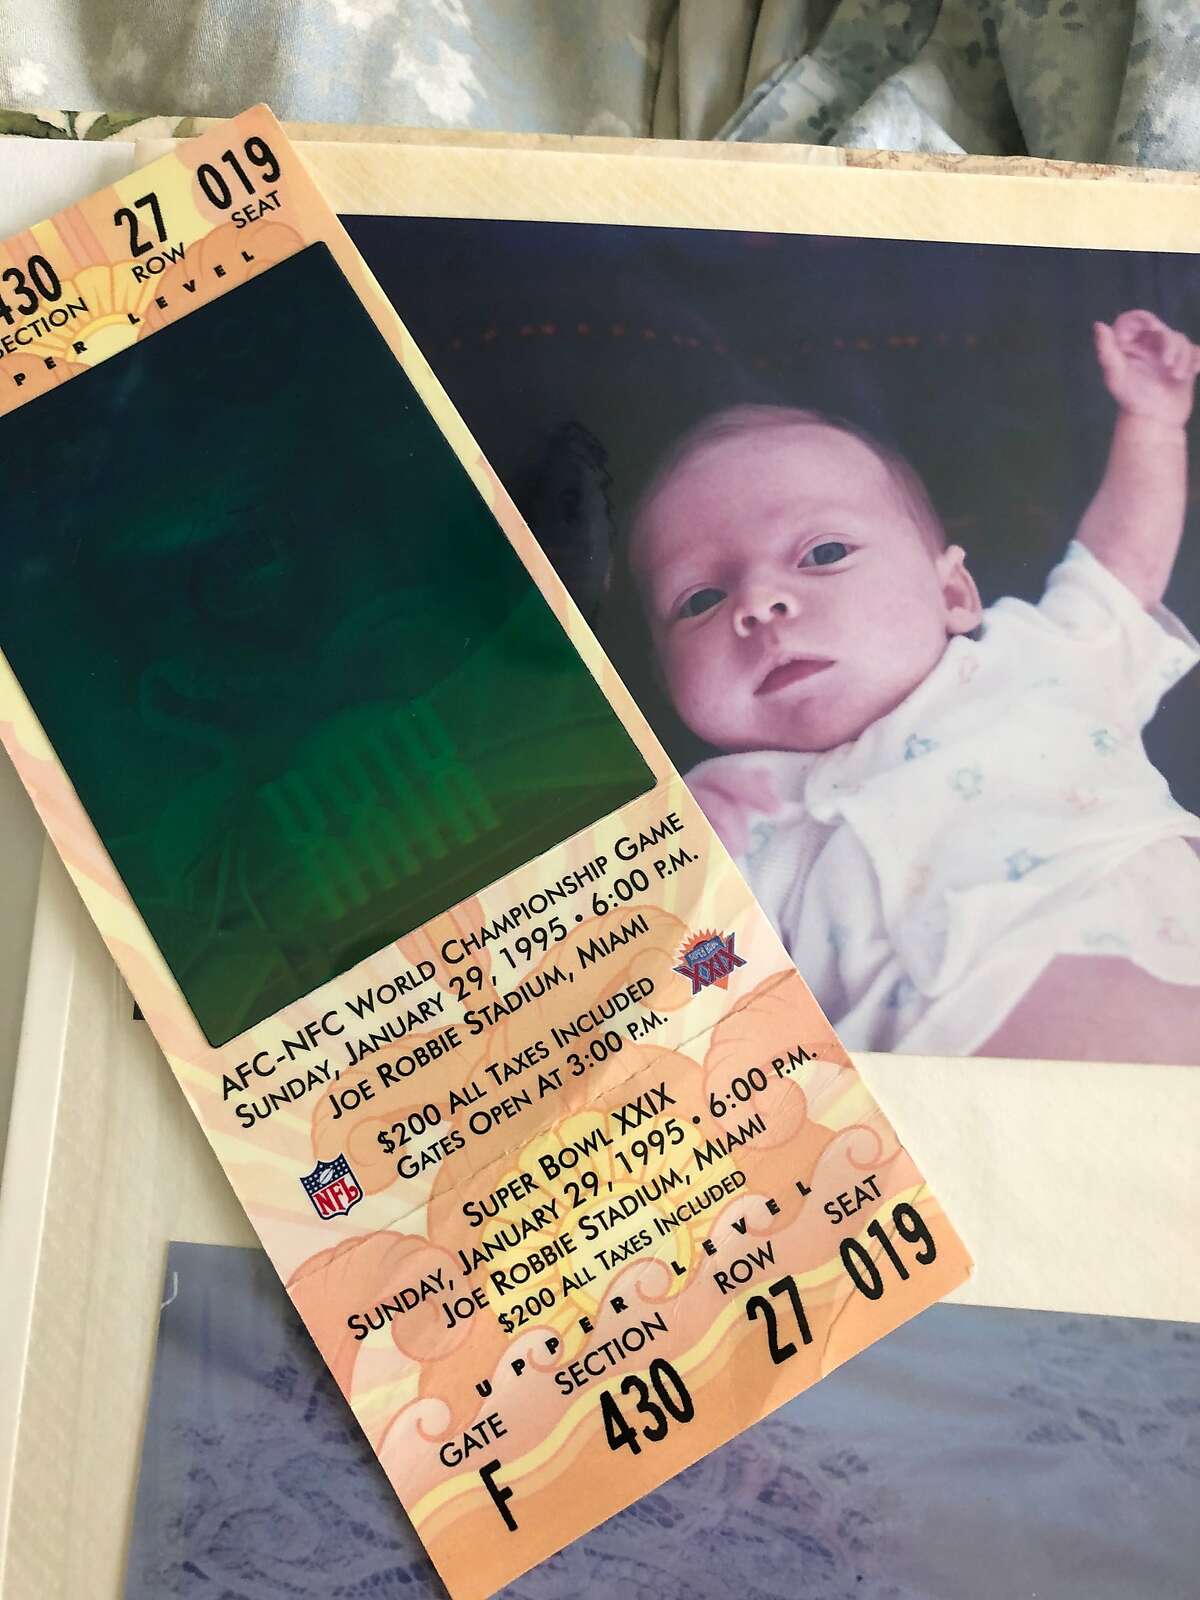 Columnist Ann Killion's infant daughter and Super Bowl XXIX ticket